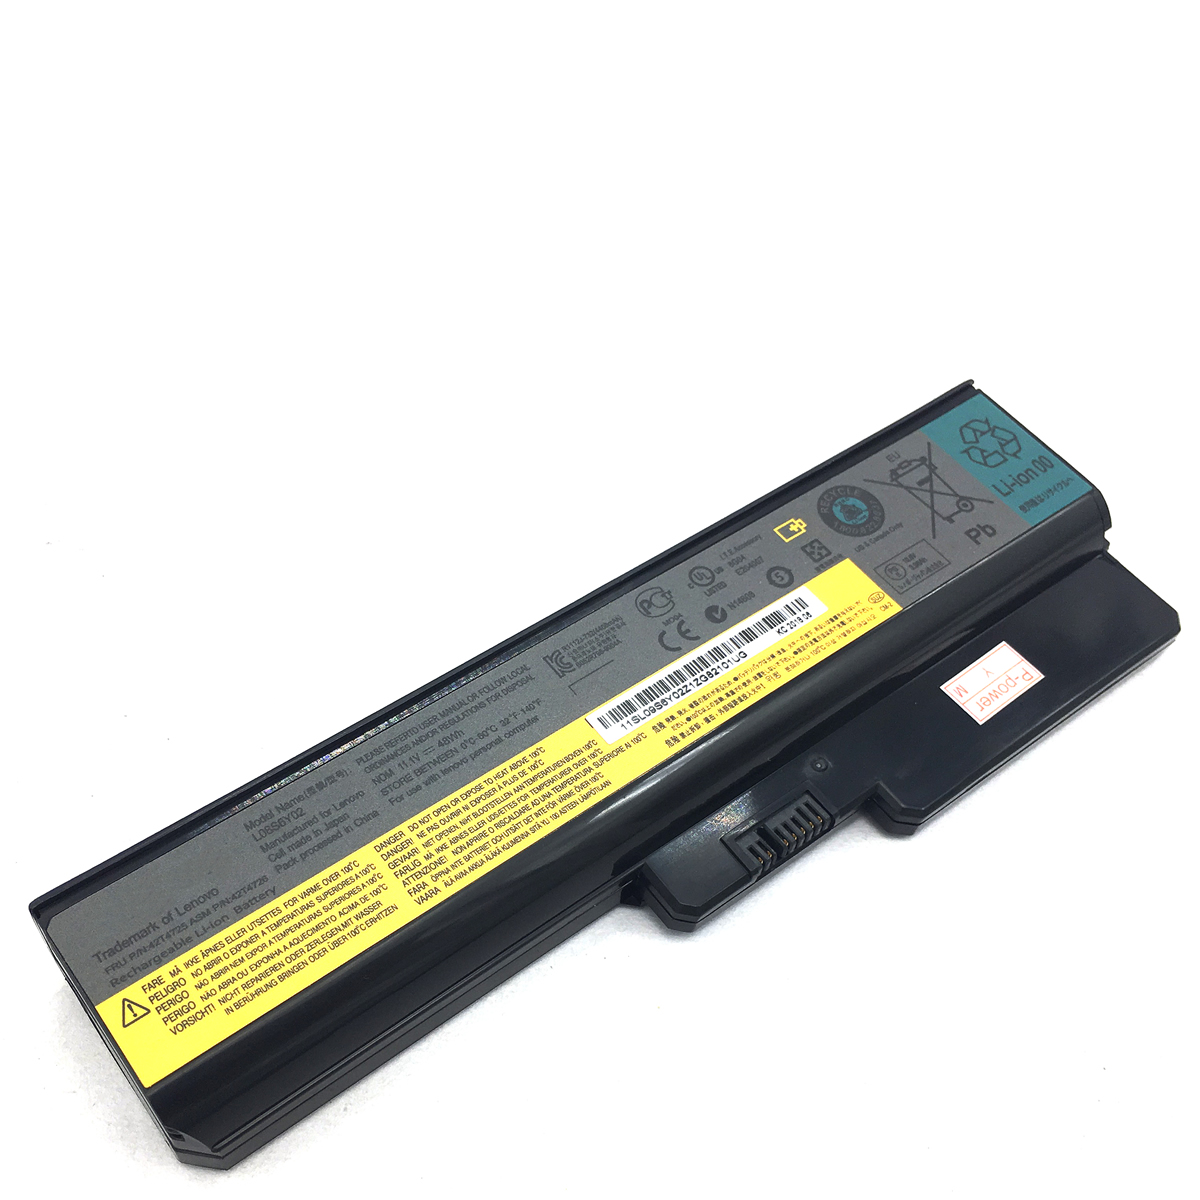 LENOVO IdeaPad G430 Series Batteries